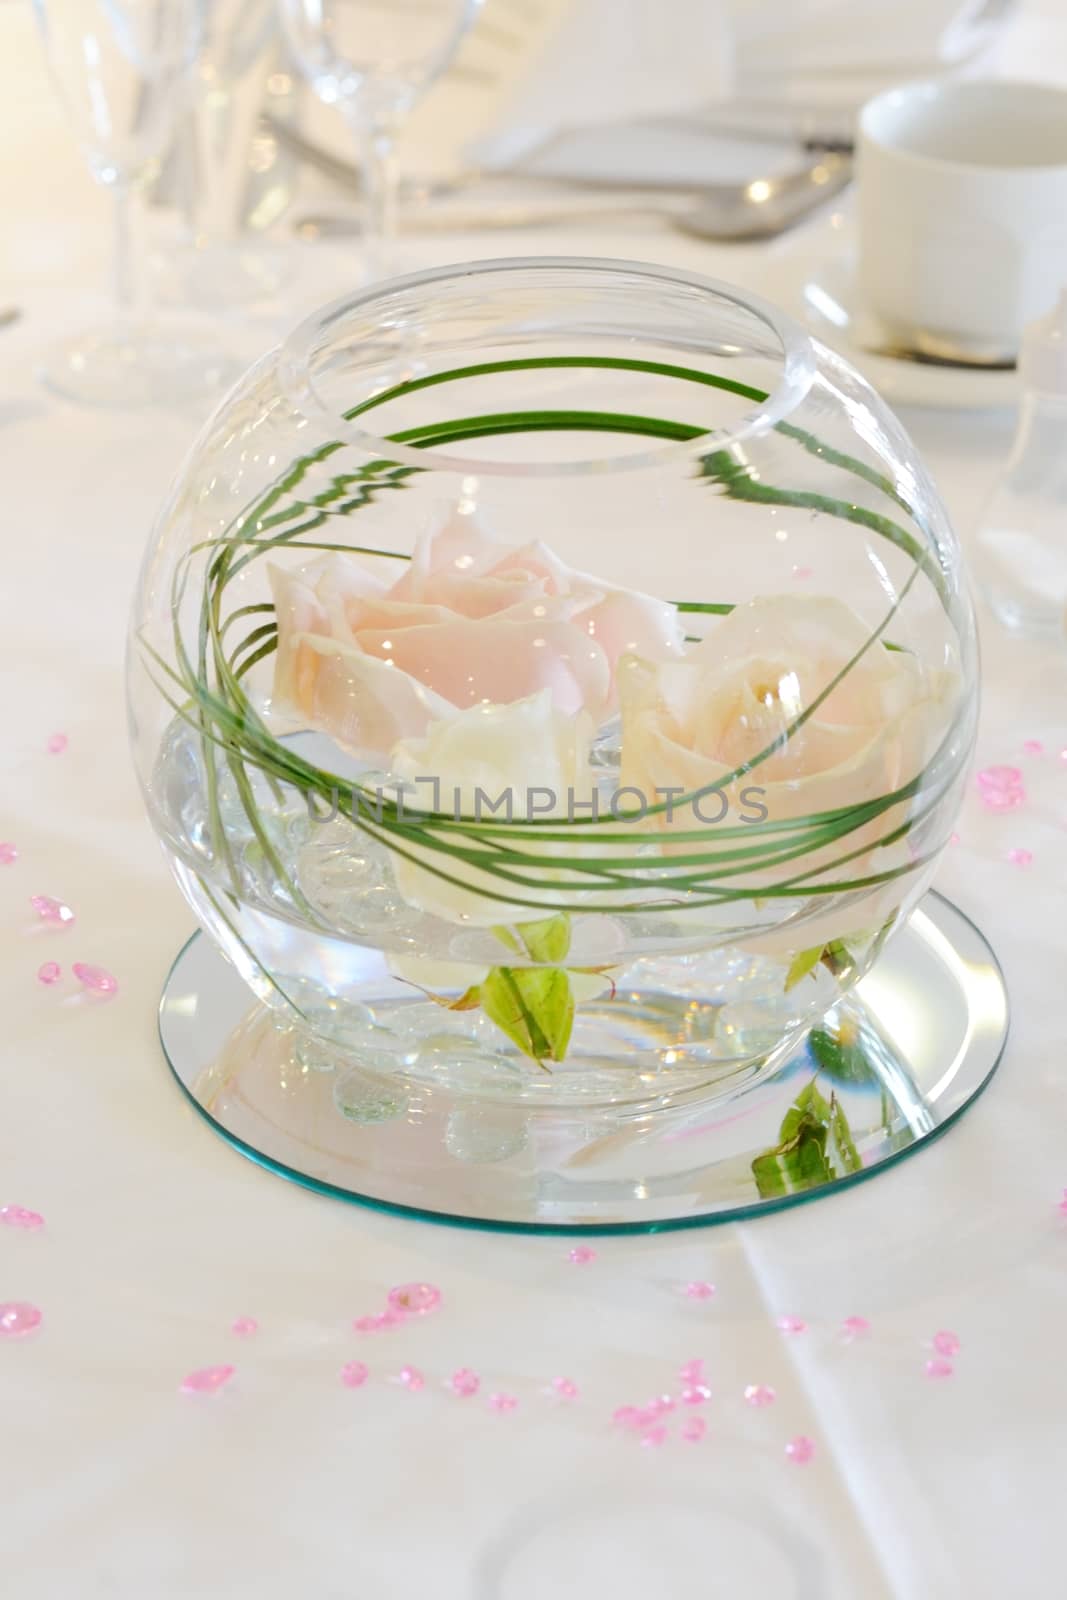 Flower bowl decoration at wedding reception